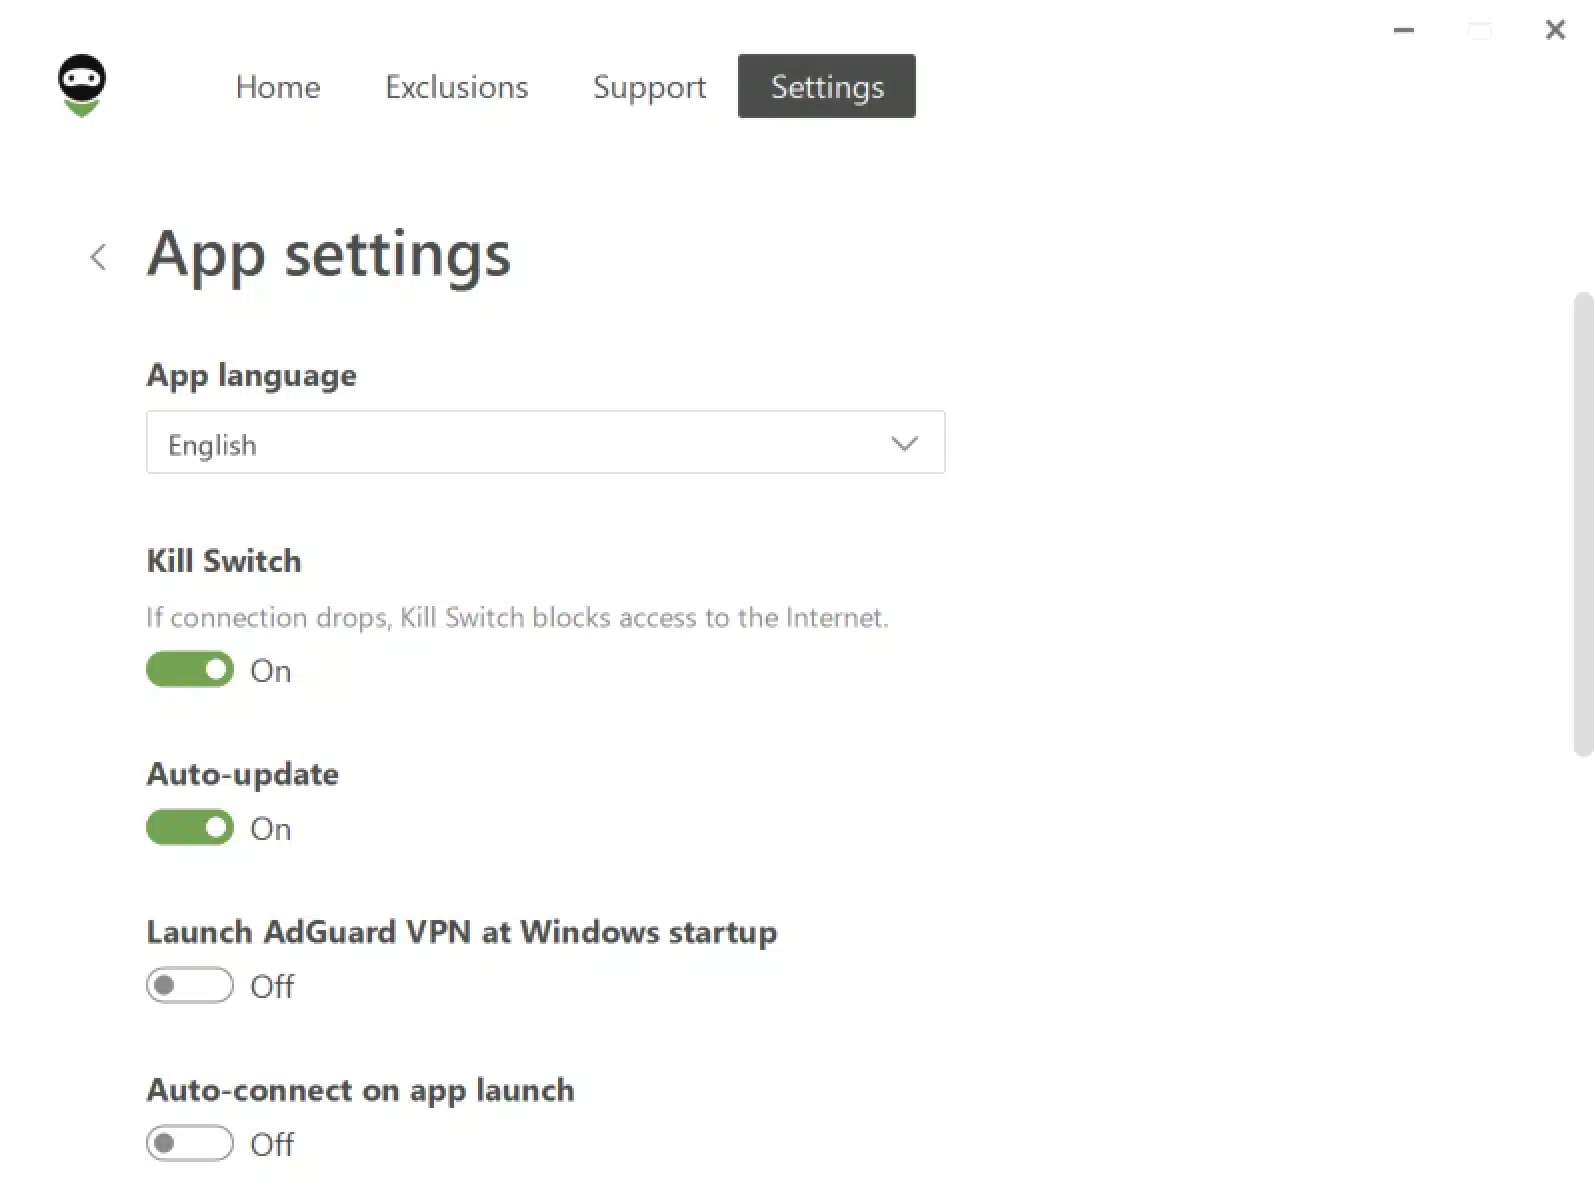 AdGuard_VPN - Windows App - App Settings 1